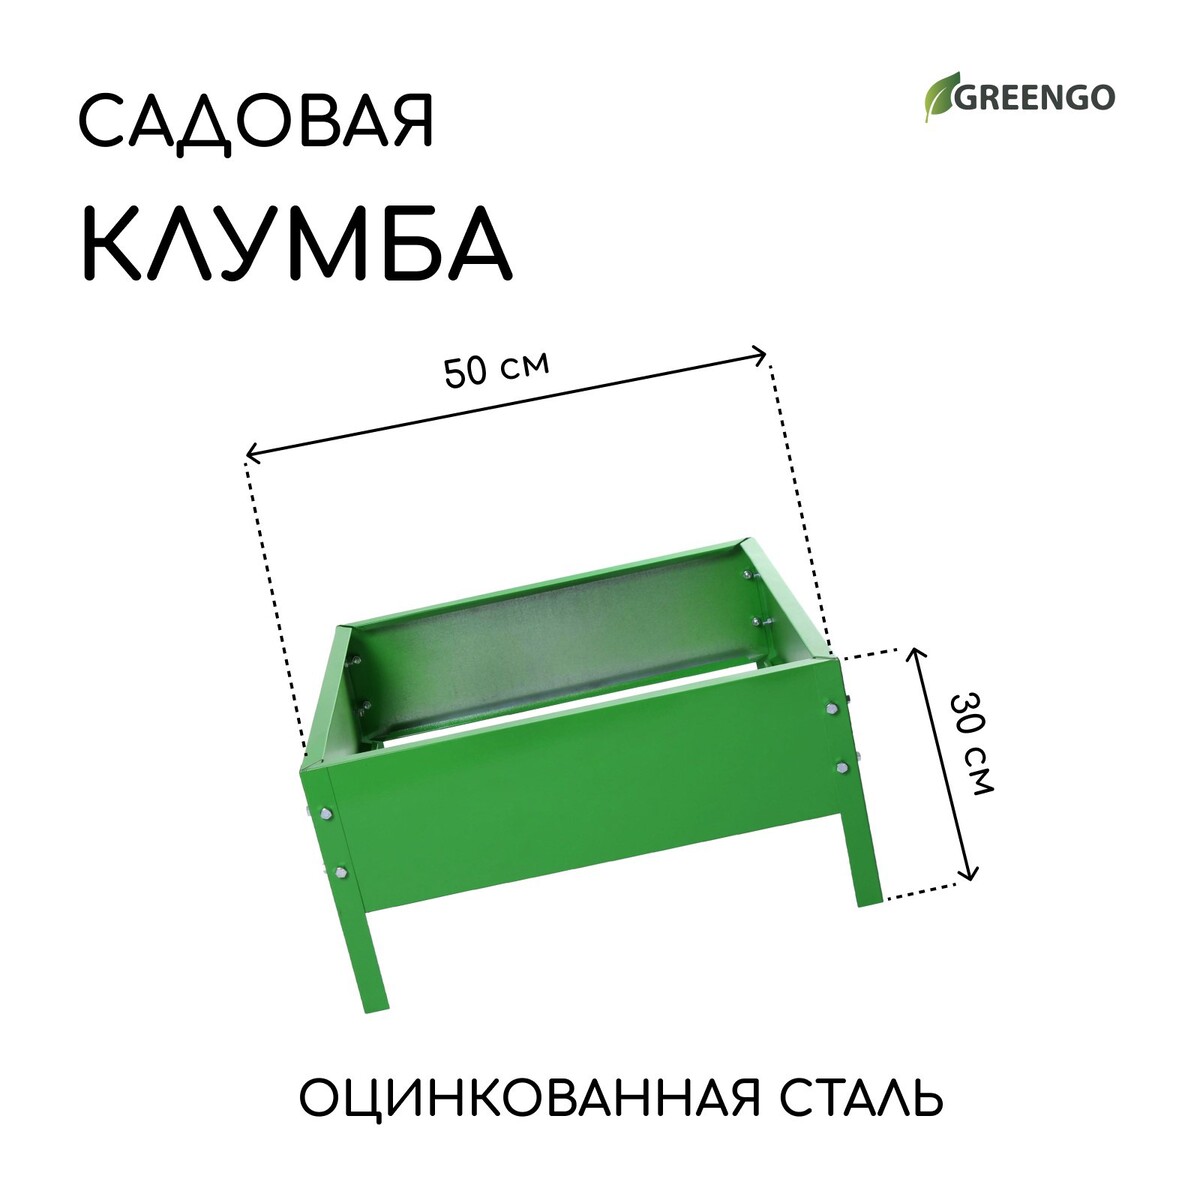 Клумба оцинкованная, 50 × 50 × 15 см, ярко-зеленая, greengo краска ма 15 царицынские краски ярко зеленая 1 9кг